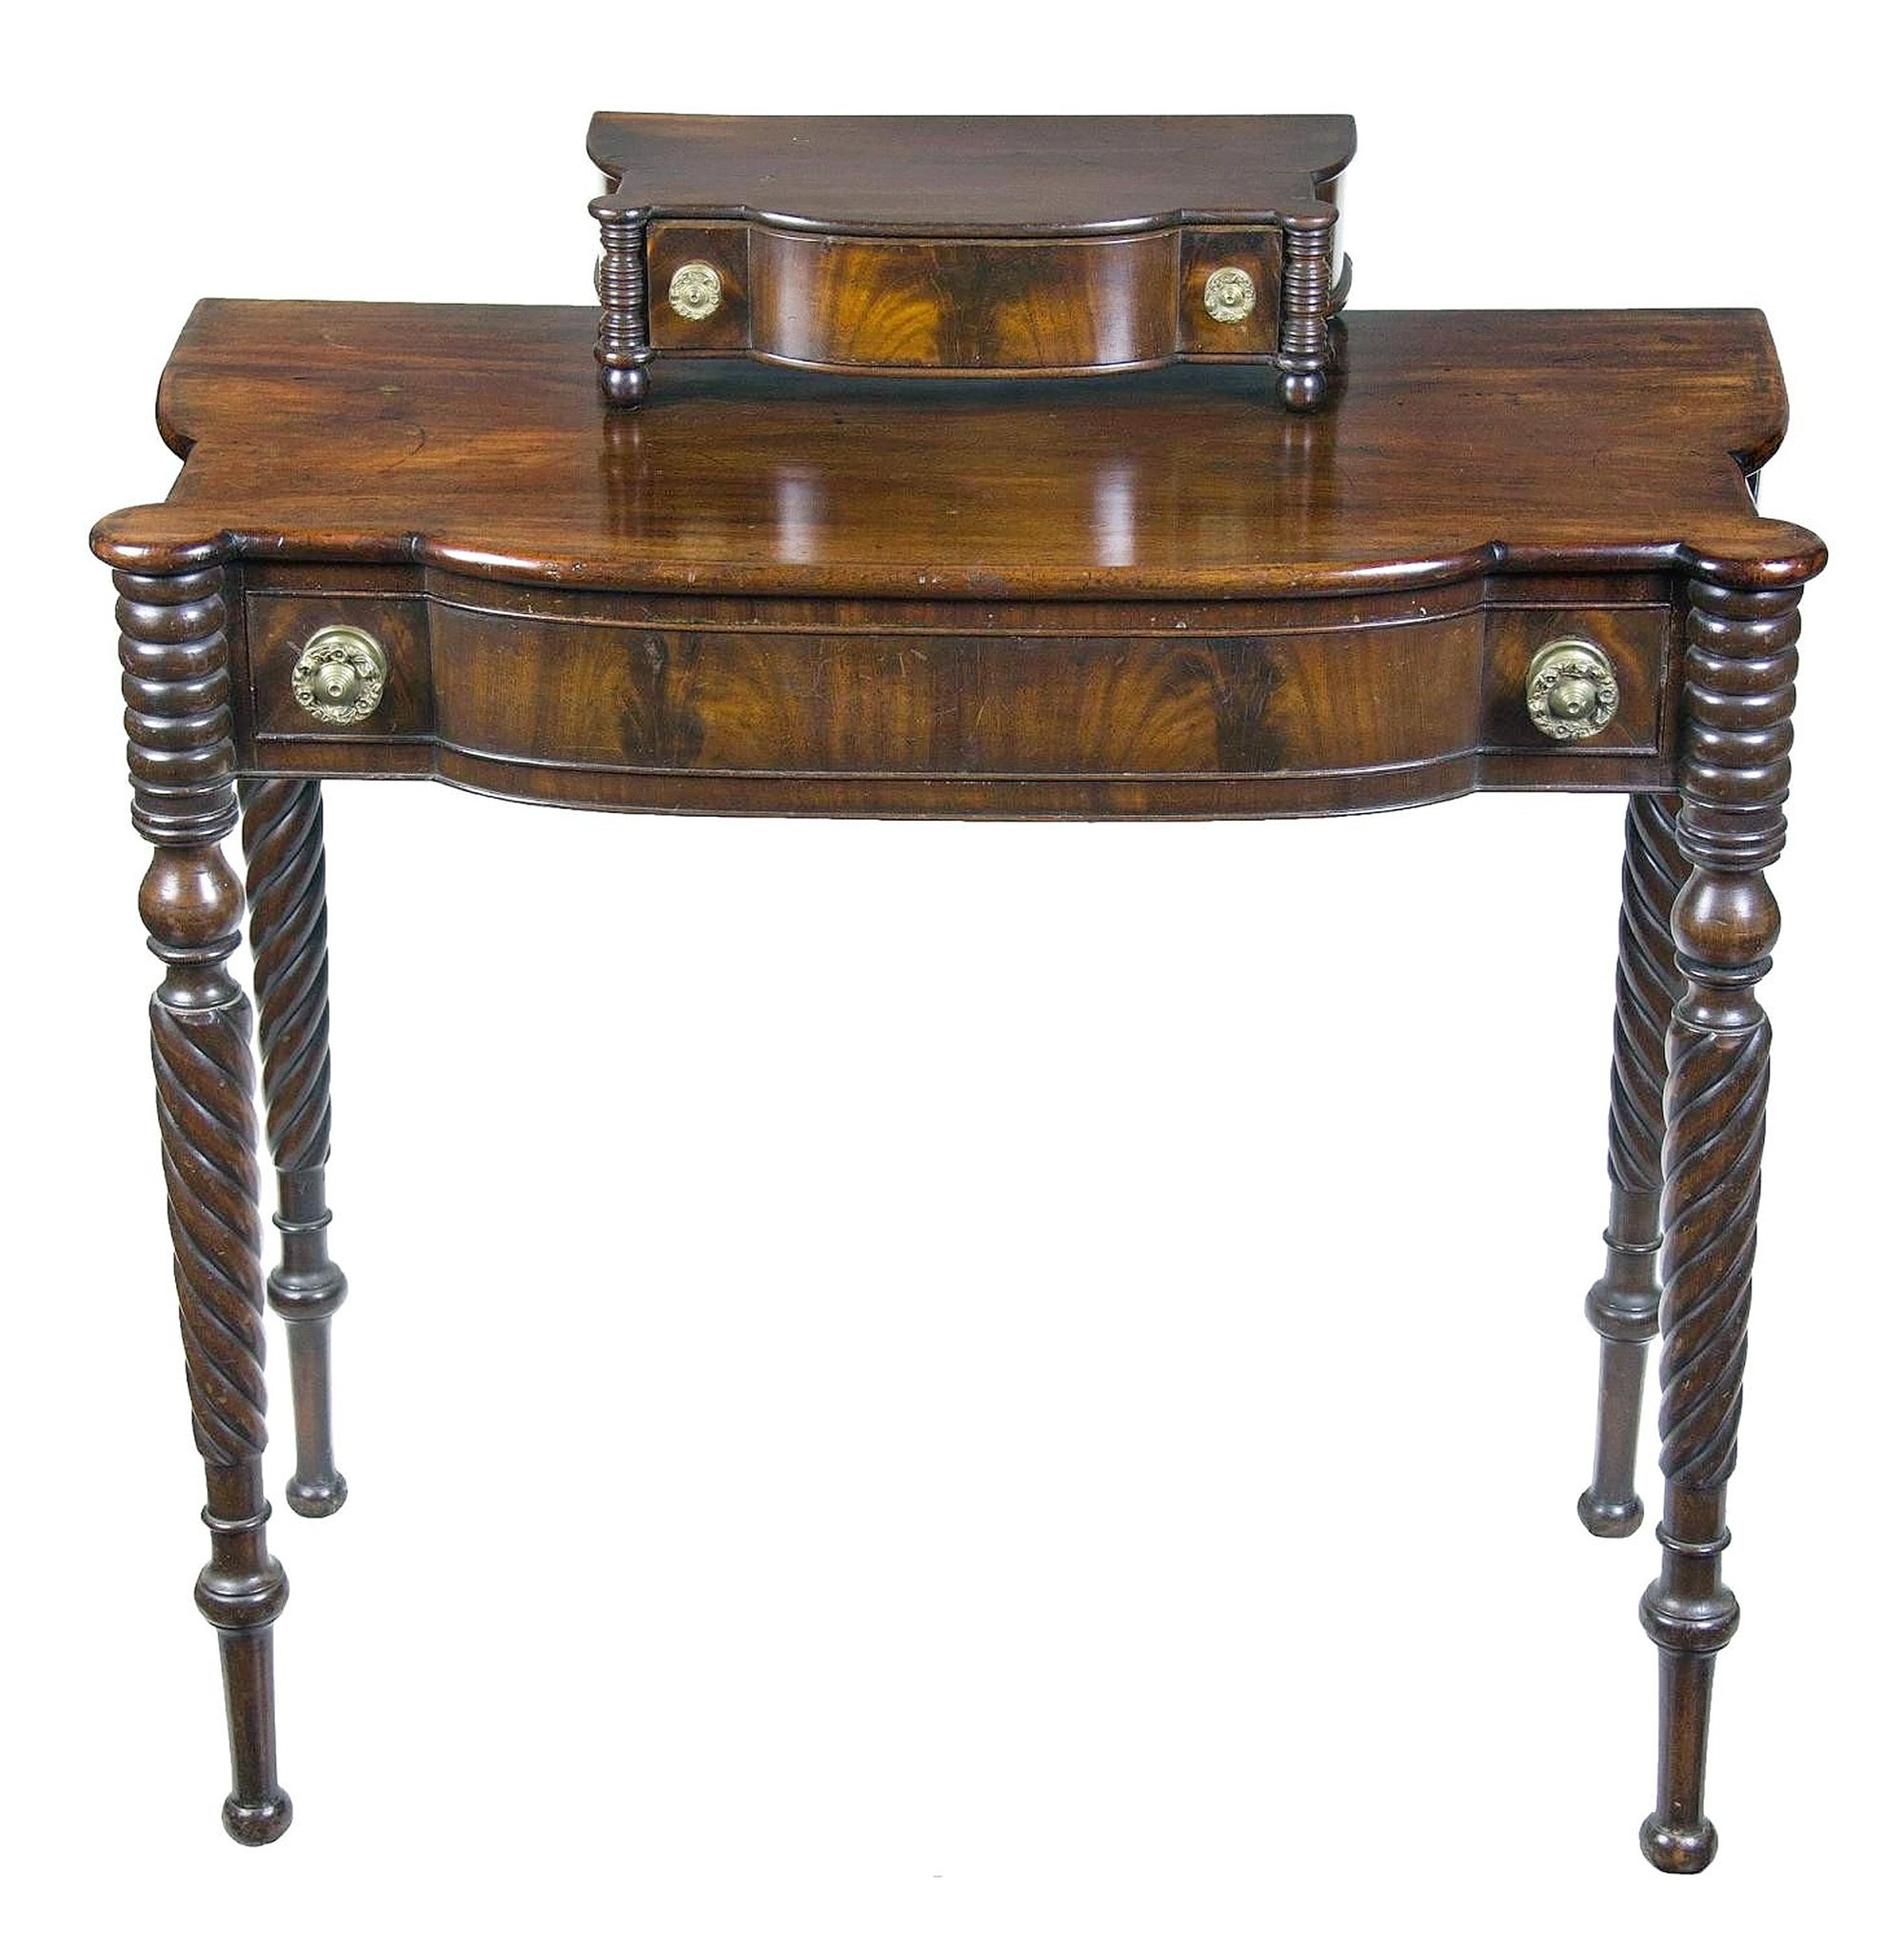 Dressing table, maker unidentified, Salem, Massachusetts-Portsmouth, New Hampshire, area, c. 1820